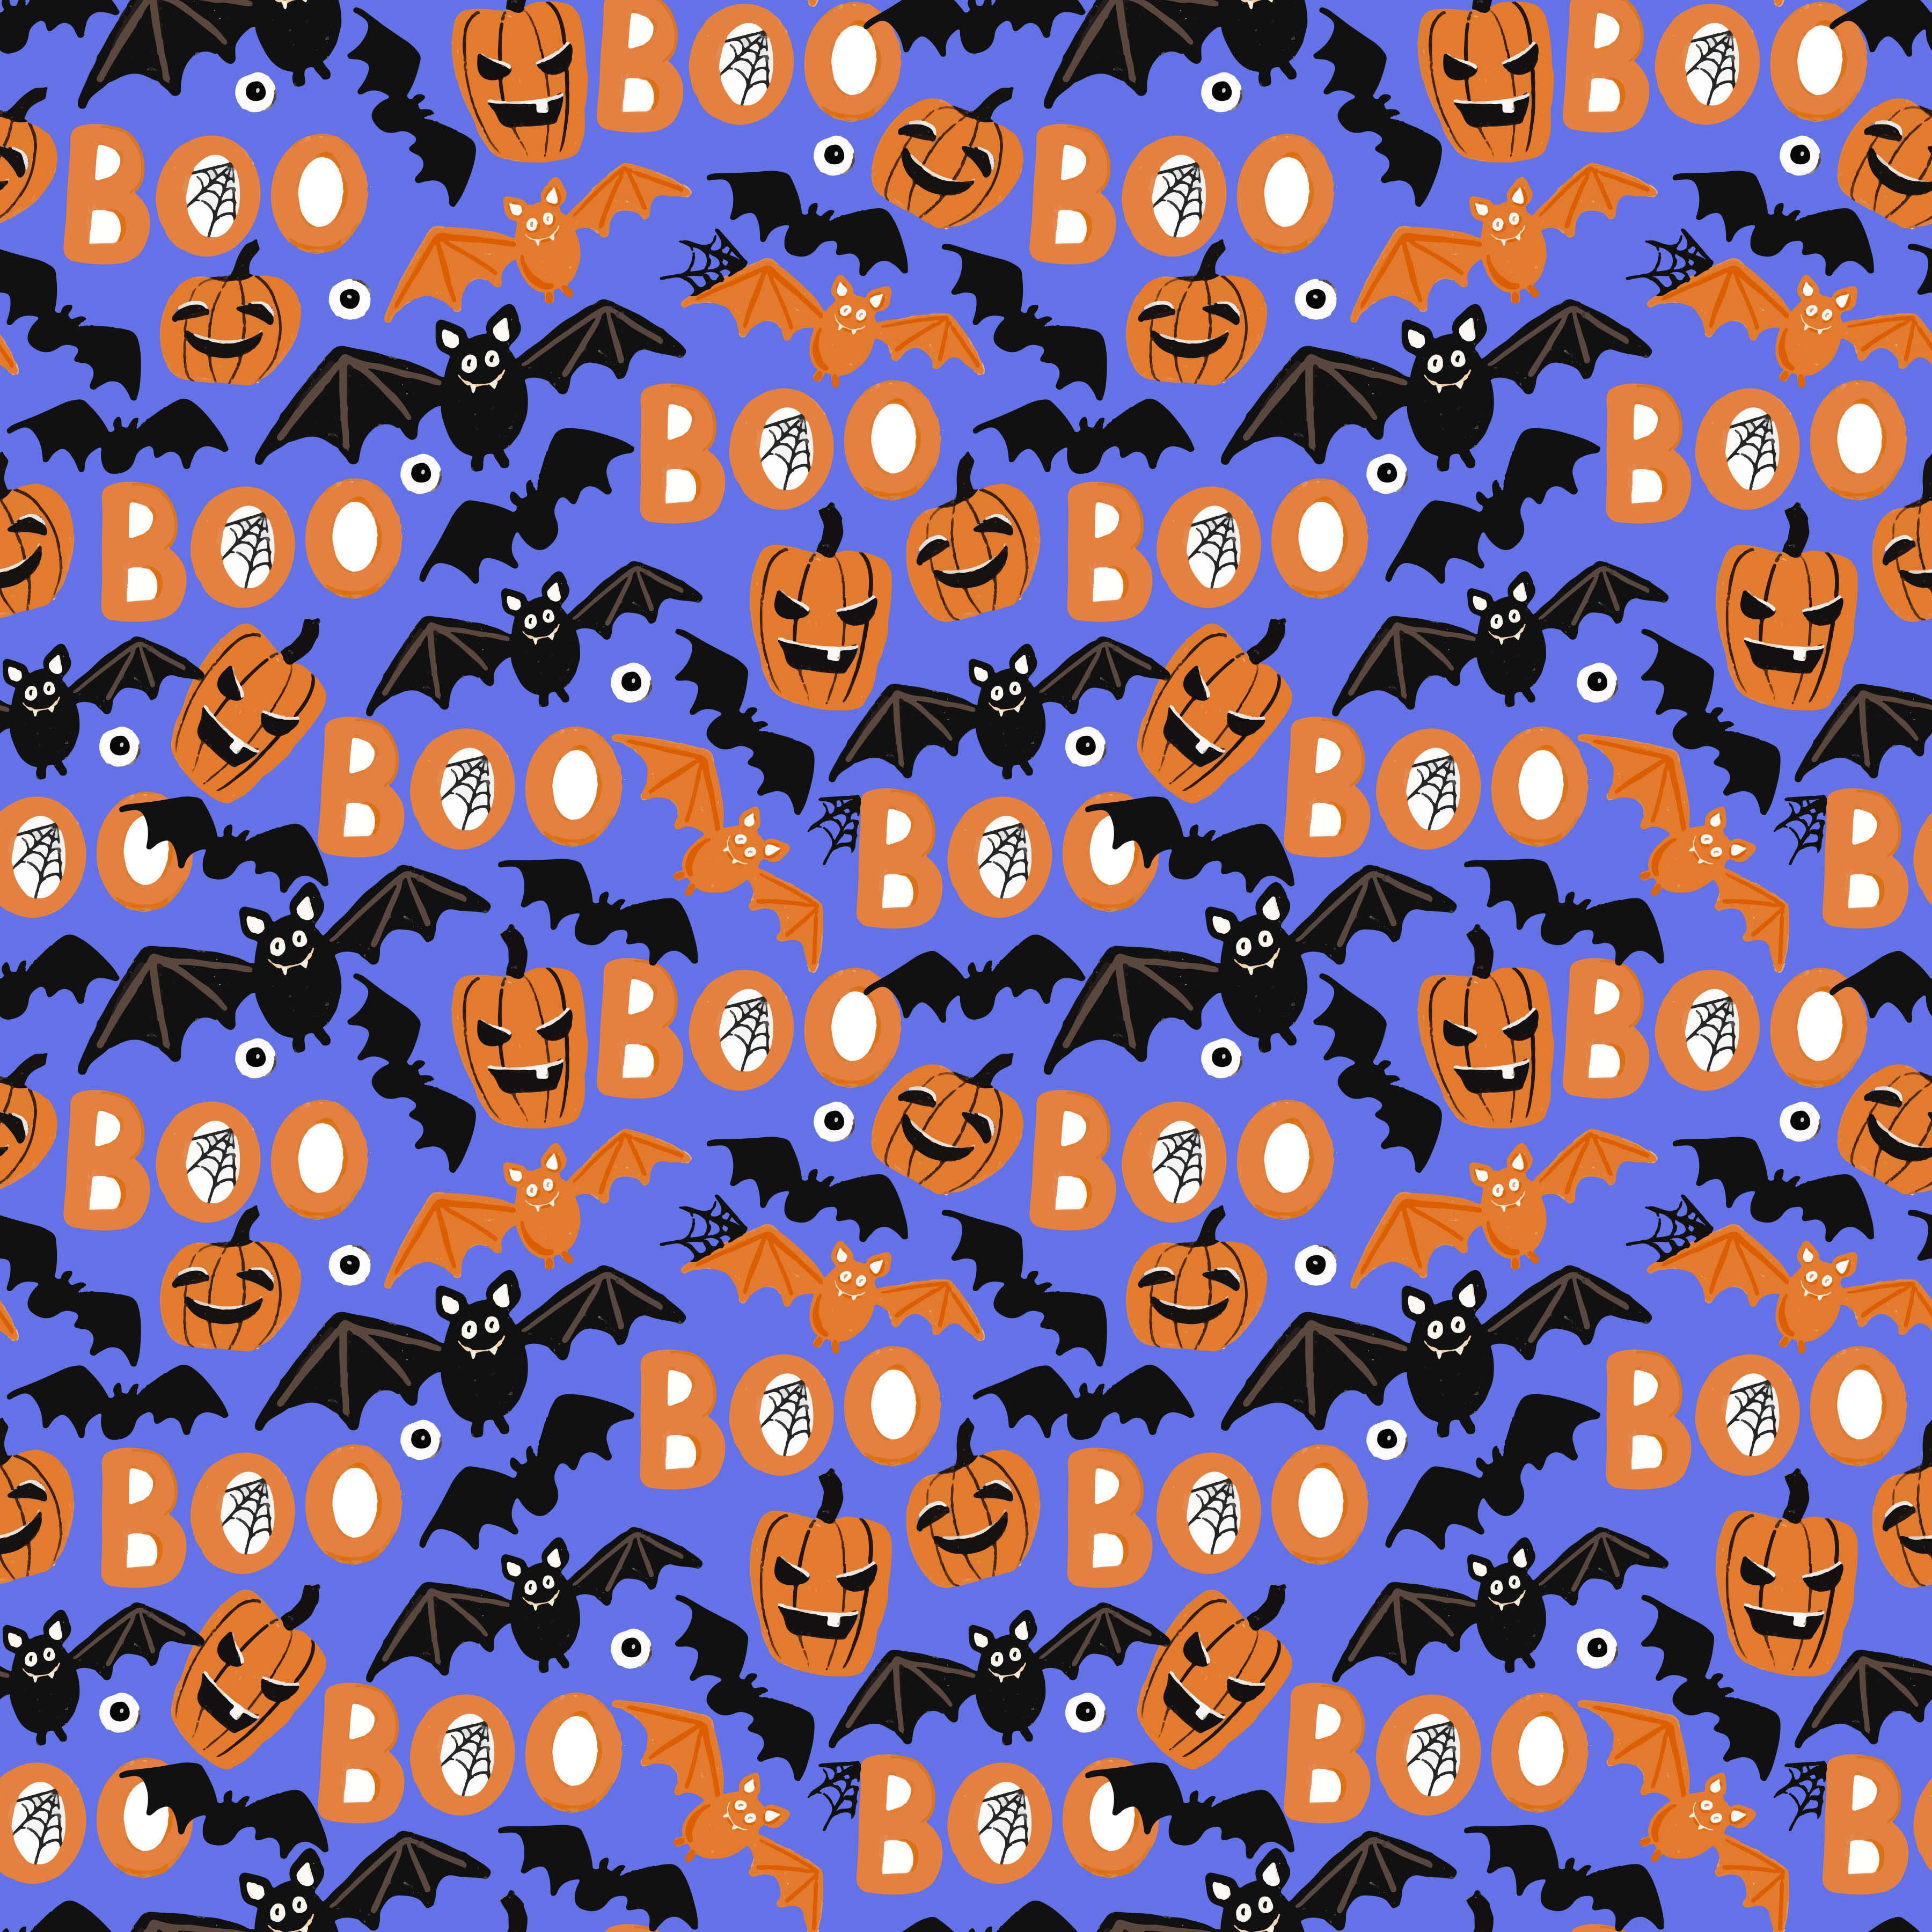 Boo Bats Pattern Vinyl 12" x 12" - The Vinyl Haus